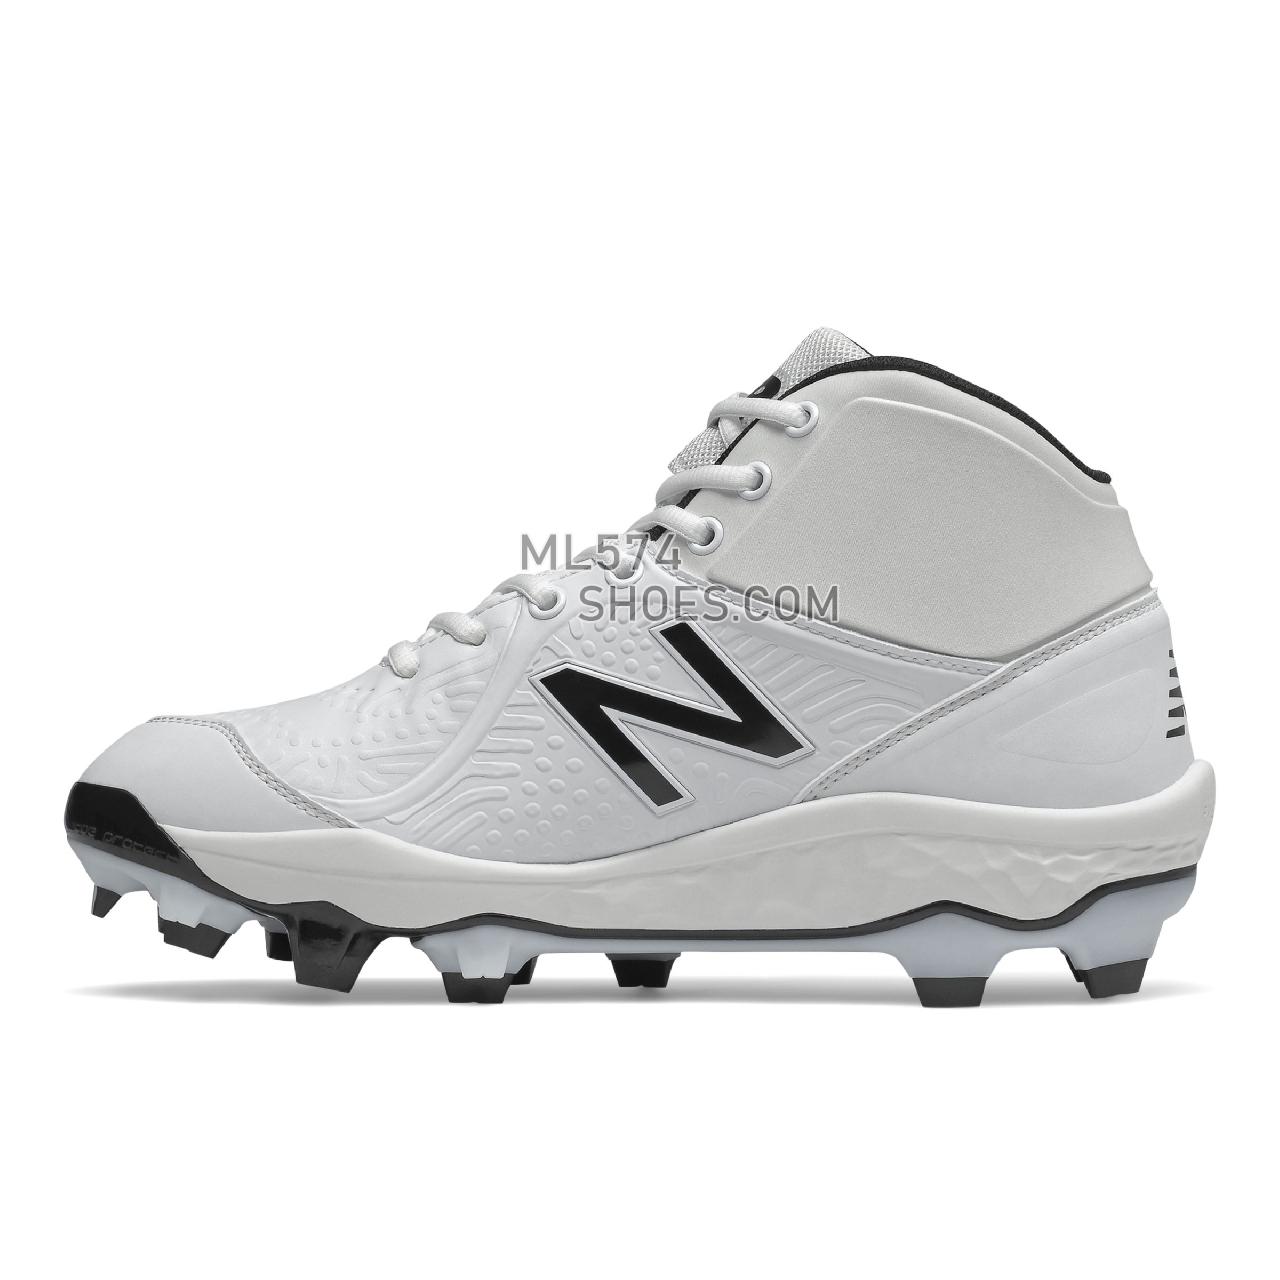 New Balance Fresh Foam 3000v5 Mid-Cut TPU - Men's Mid-Cut Baseball Cleats - White - PM3000W5